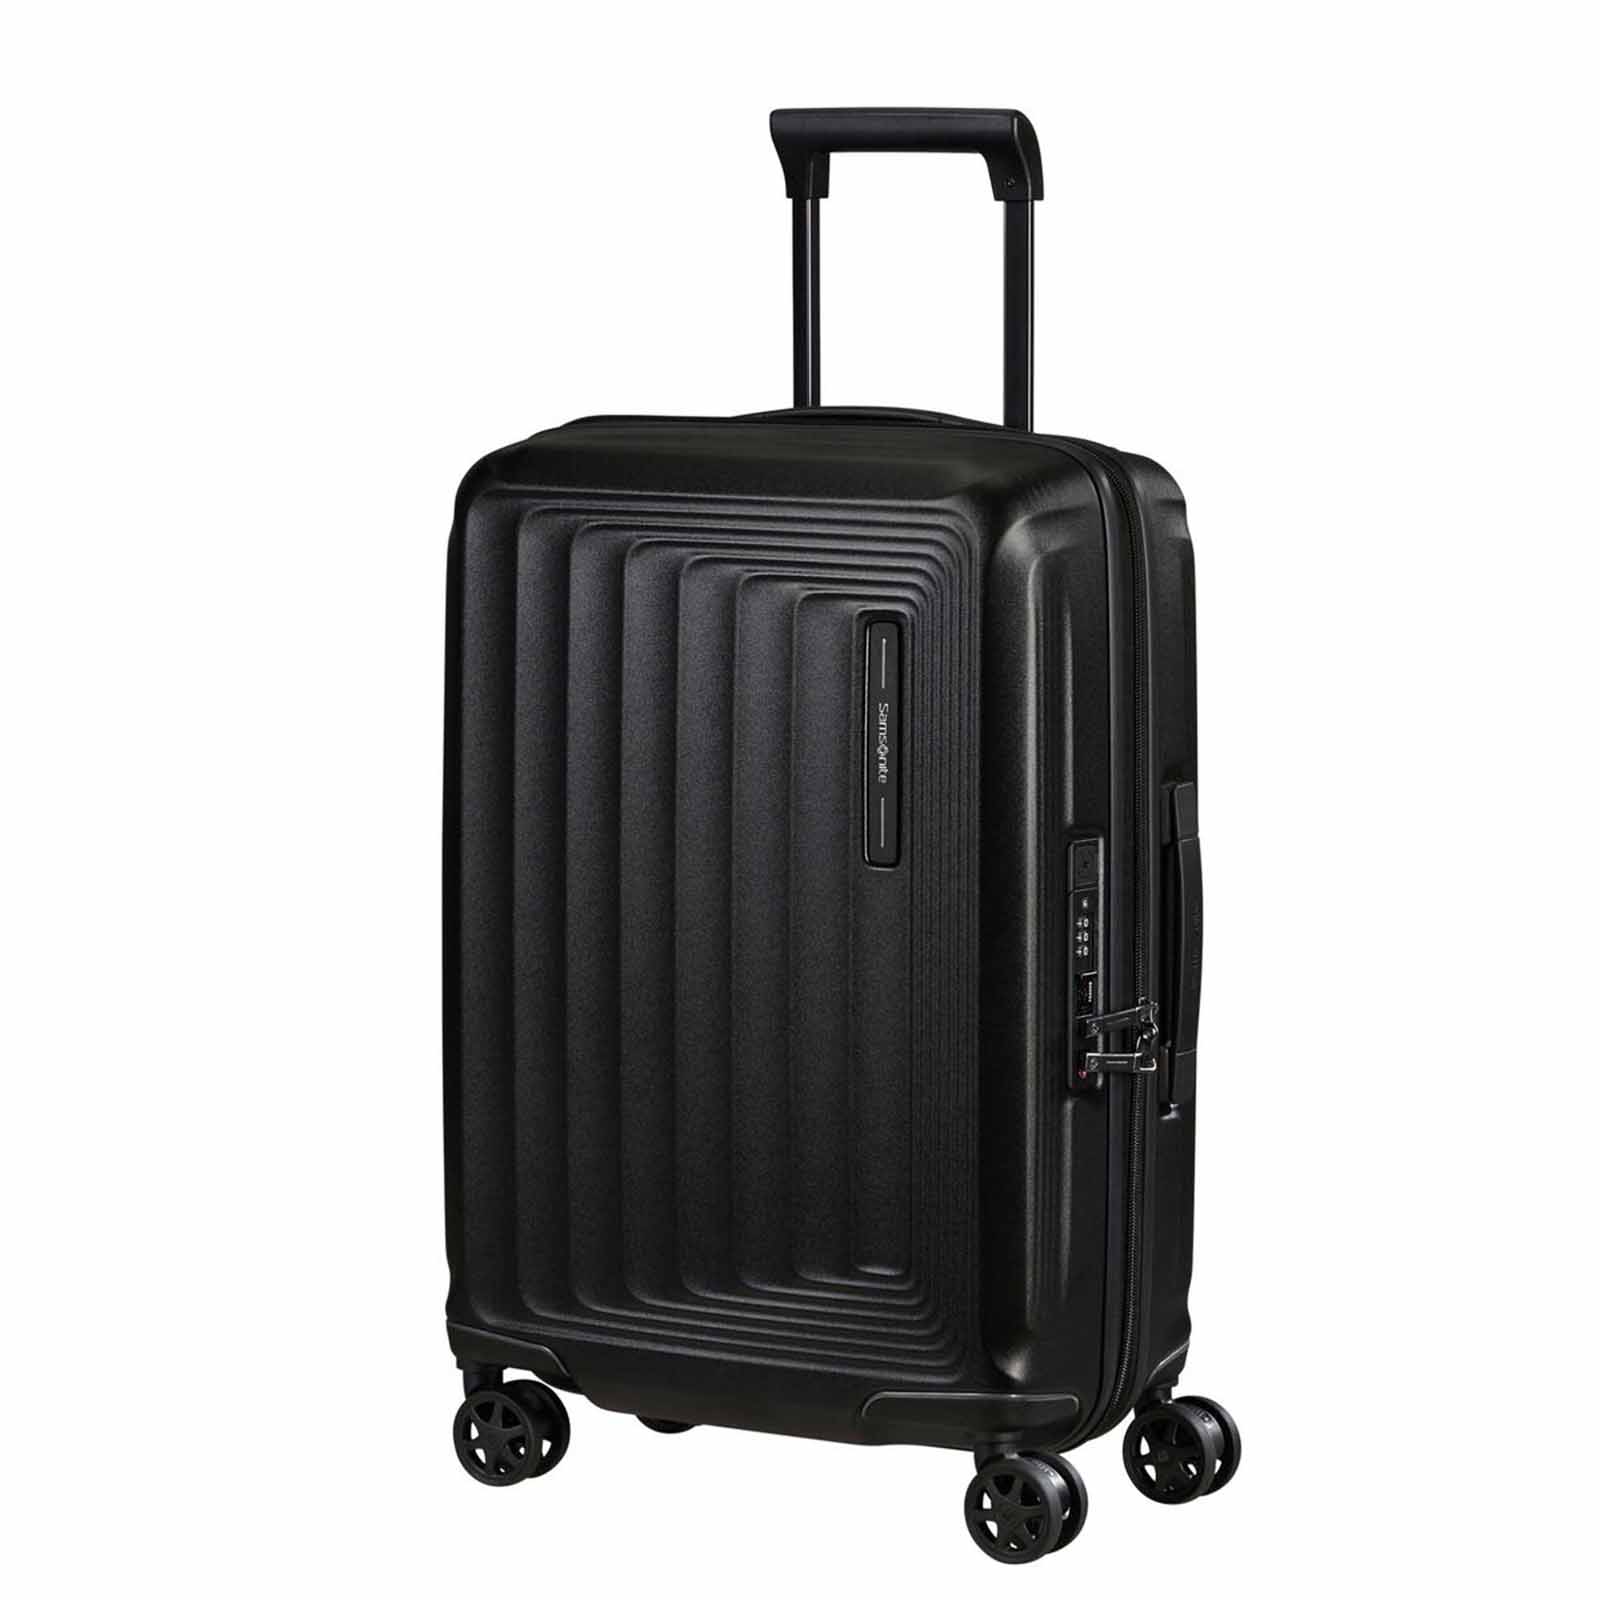 Samsonite-Nuon-55cm-Carry-On-Suitcase-Matt-Graphite-Front-Angle